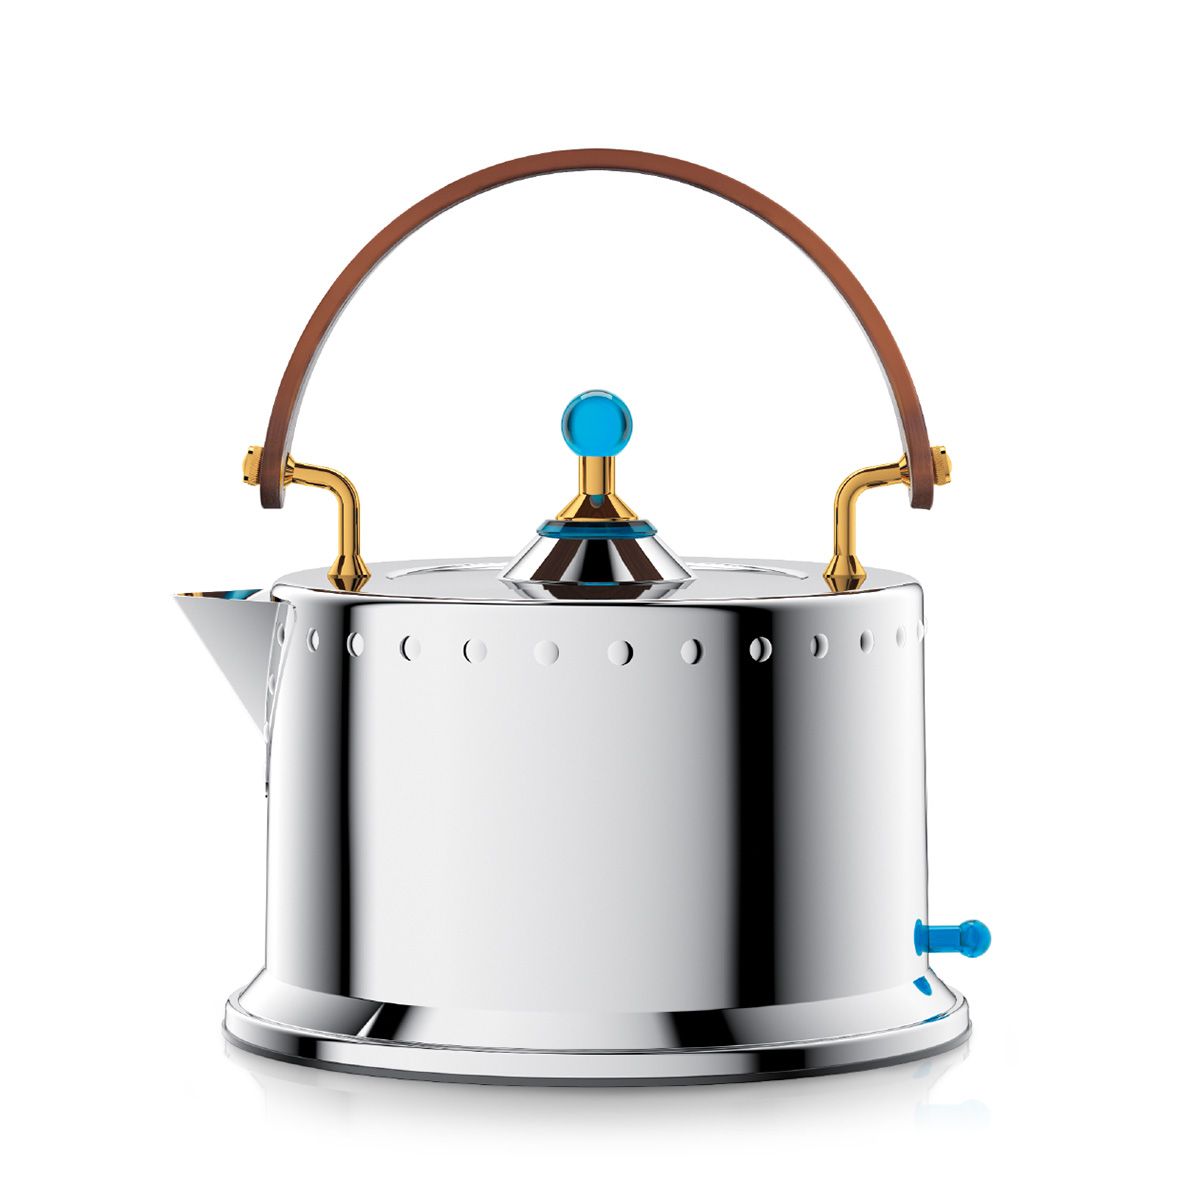 bodum hot water kettle